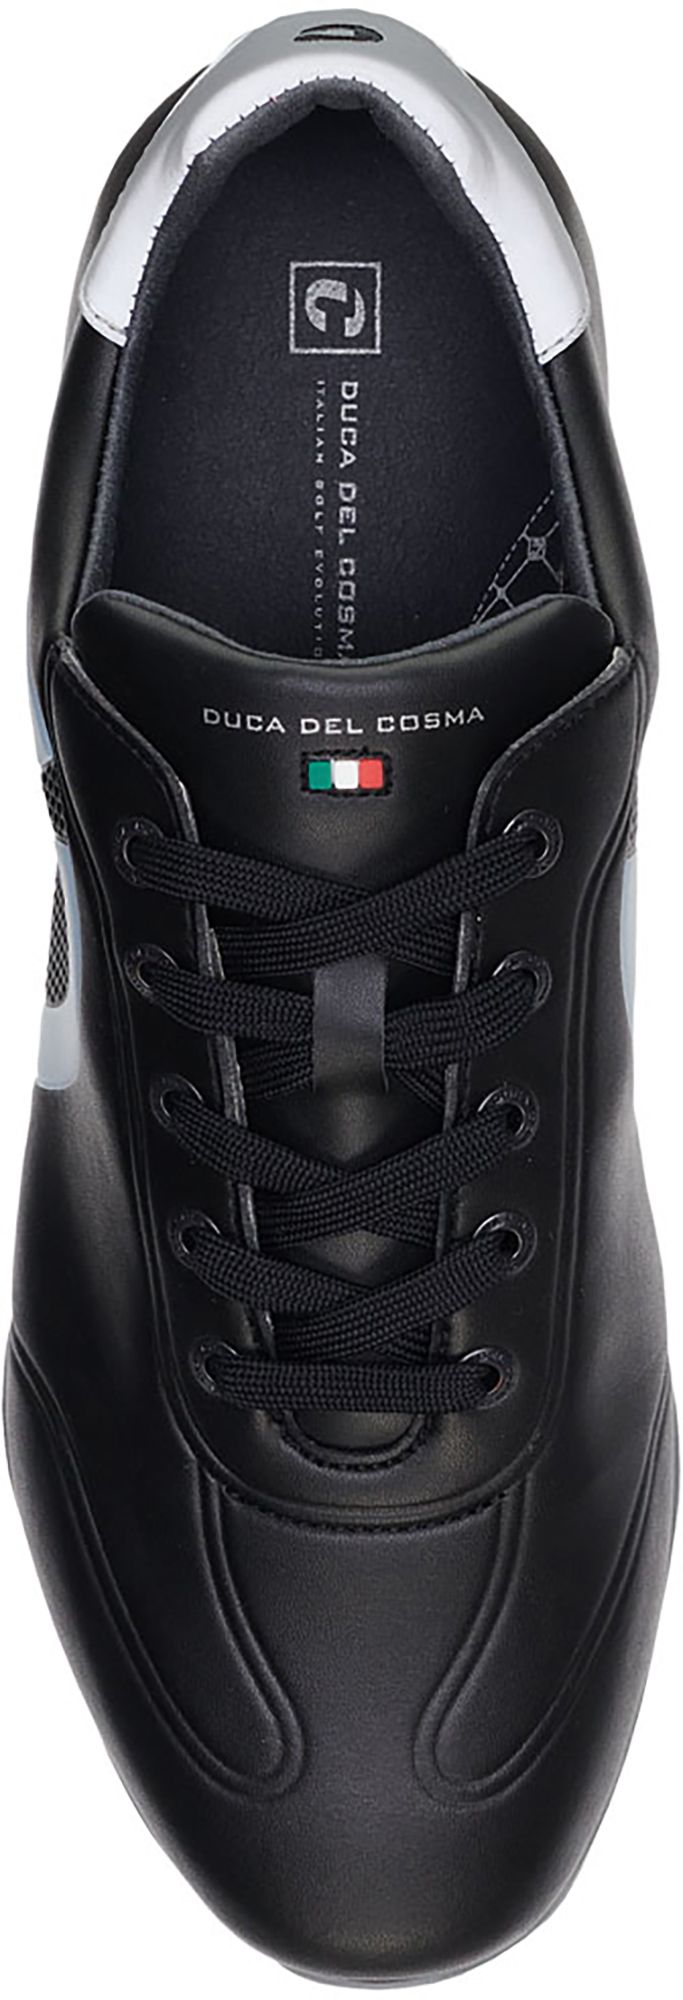 Duca Del Cosma  Men's Kingscup Golf Shoes